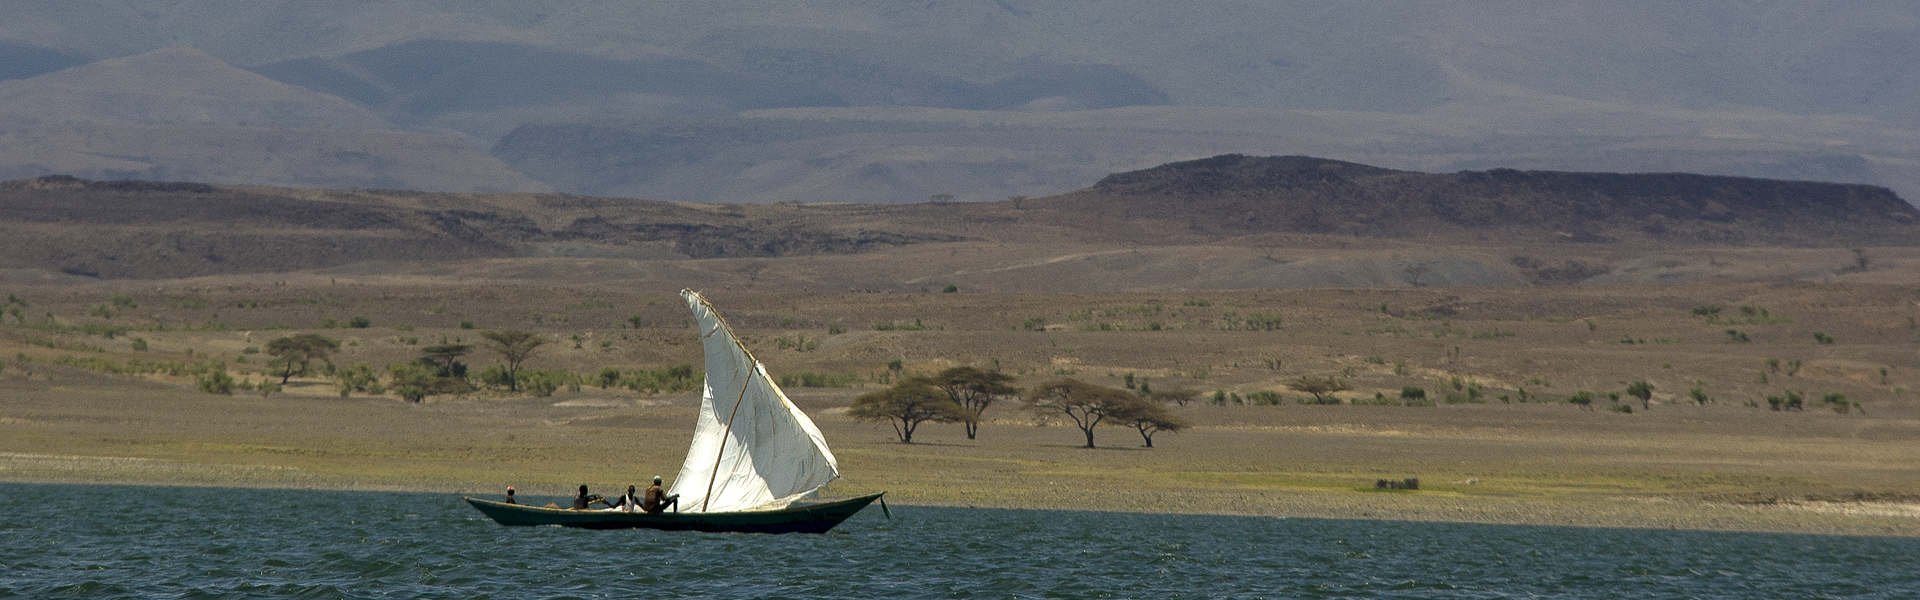 Fisherman in canoe plowing through the waters of Lake Turkana